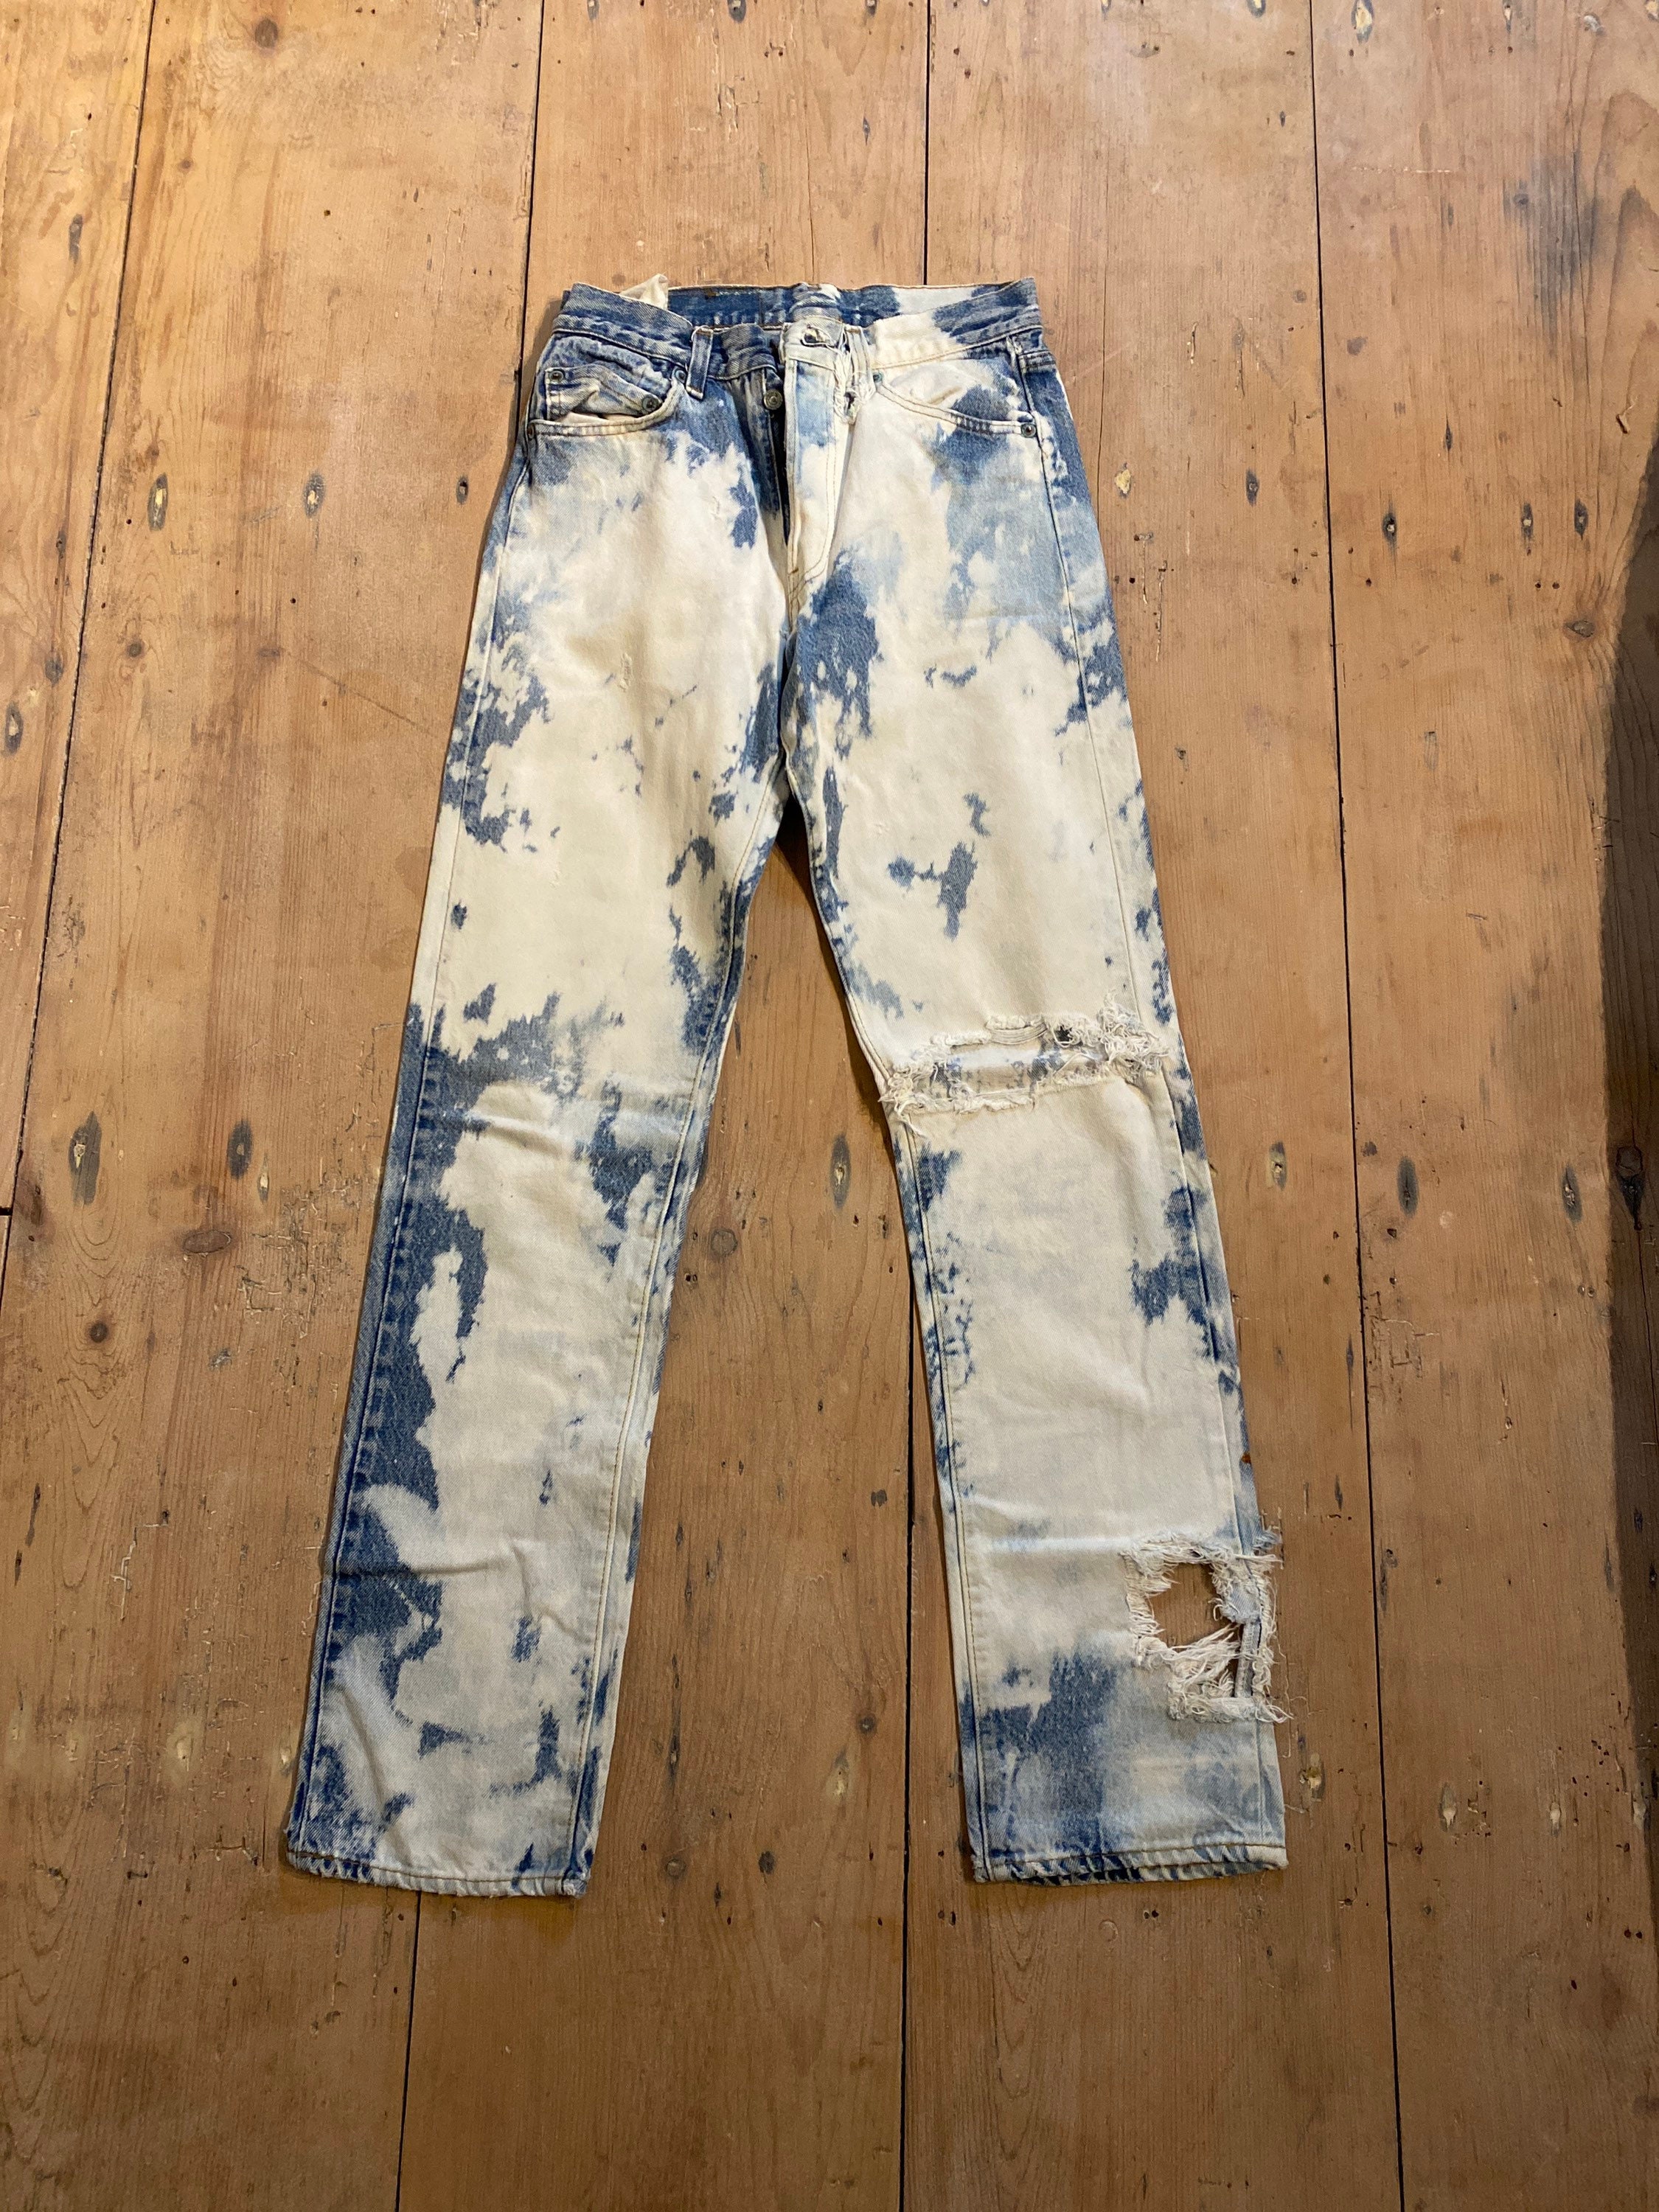 Vtg Levi 501 bleached trashed jeans punk skinhead mod made in USA